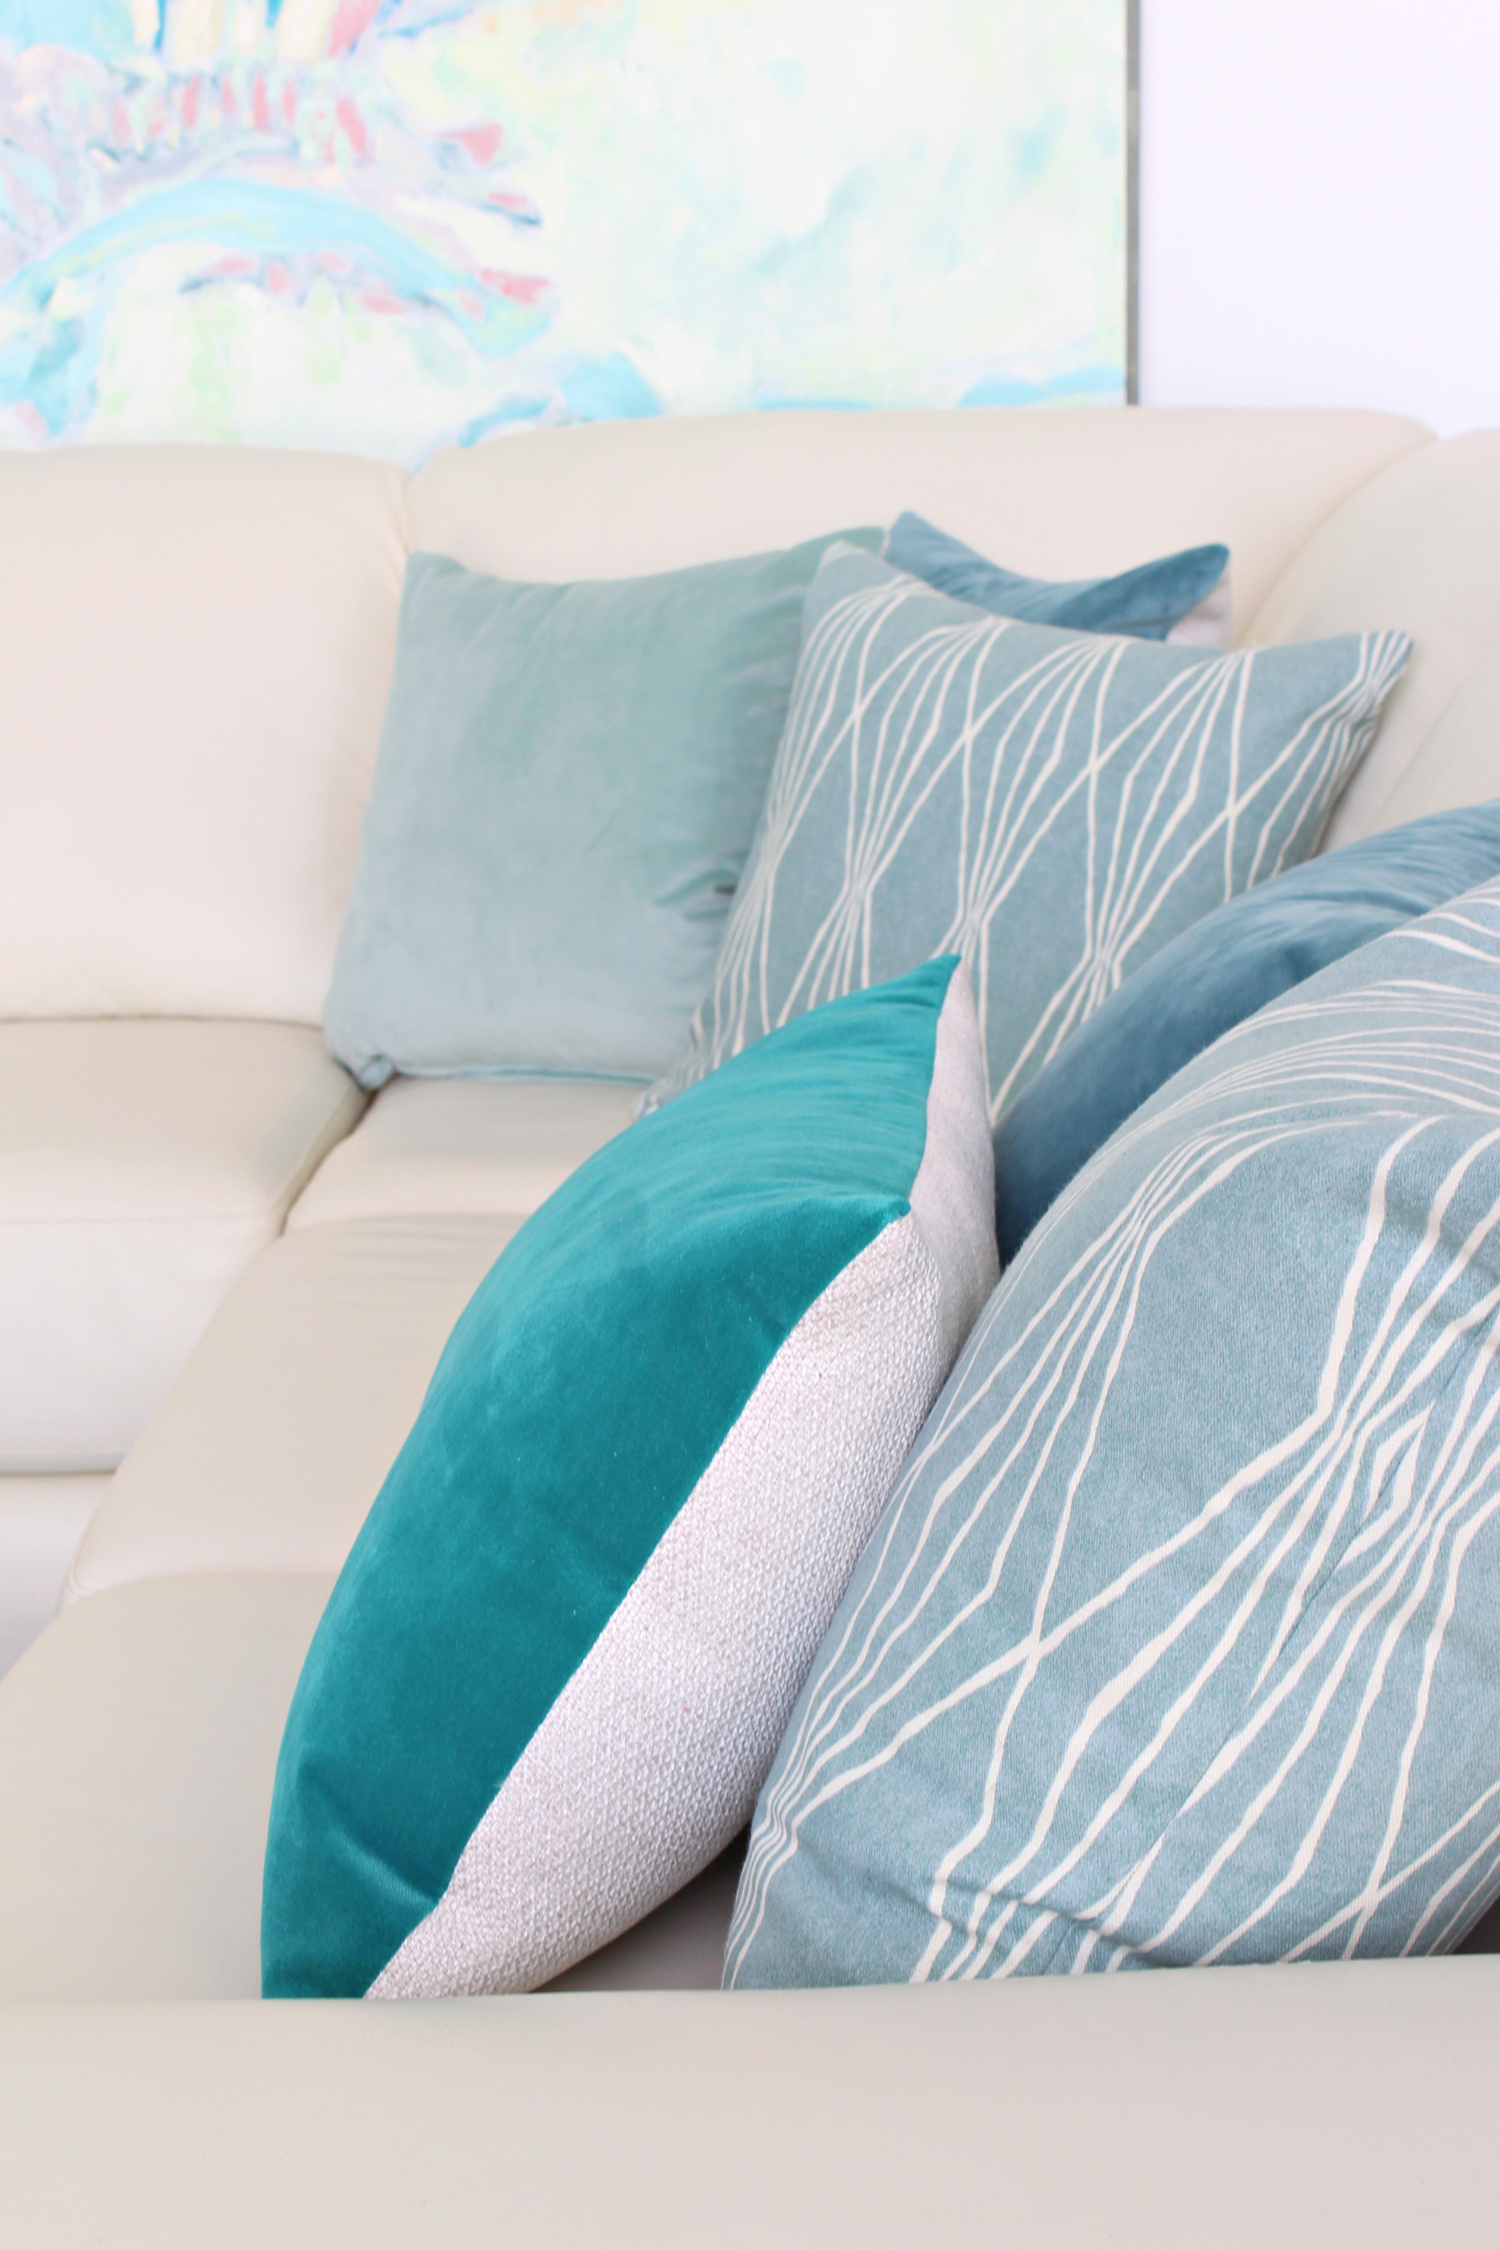 Spring pillows on cream leather sofa